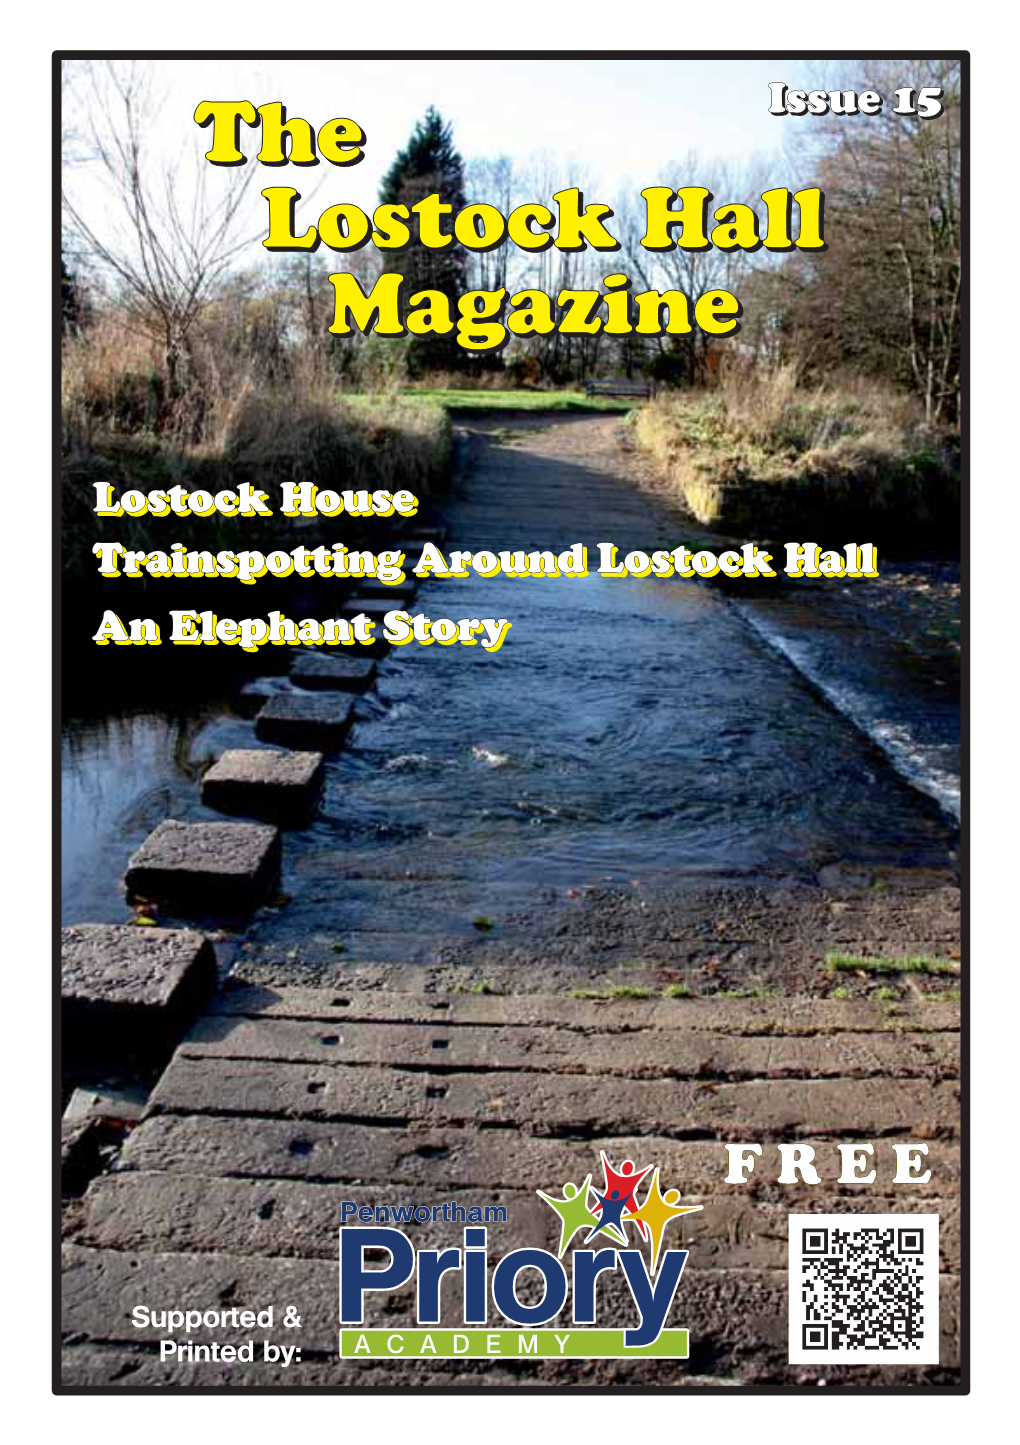 The Lostock Hall Magazine the Lostock Hall